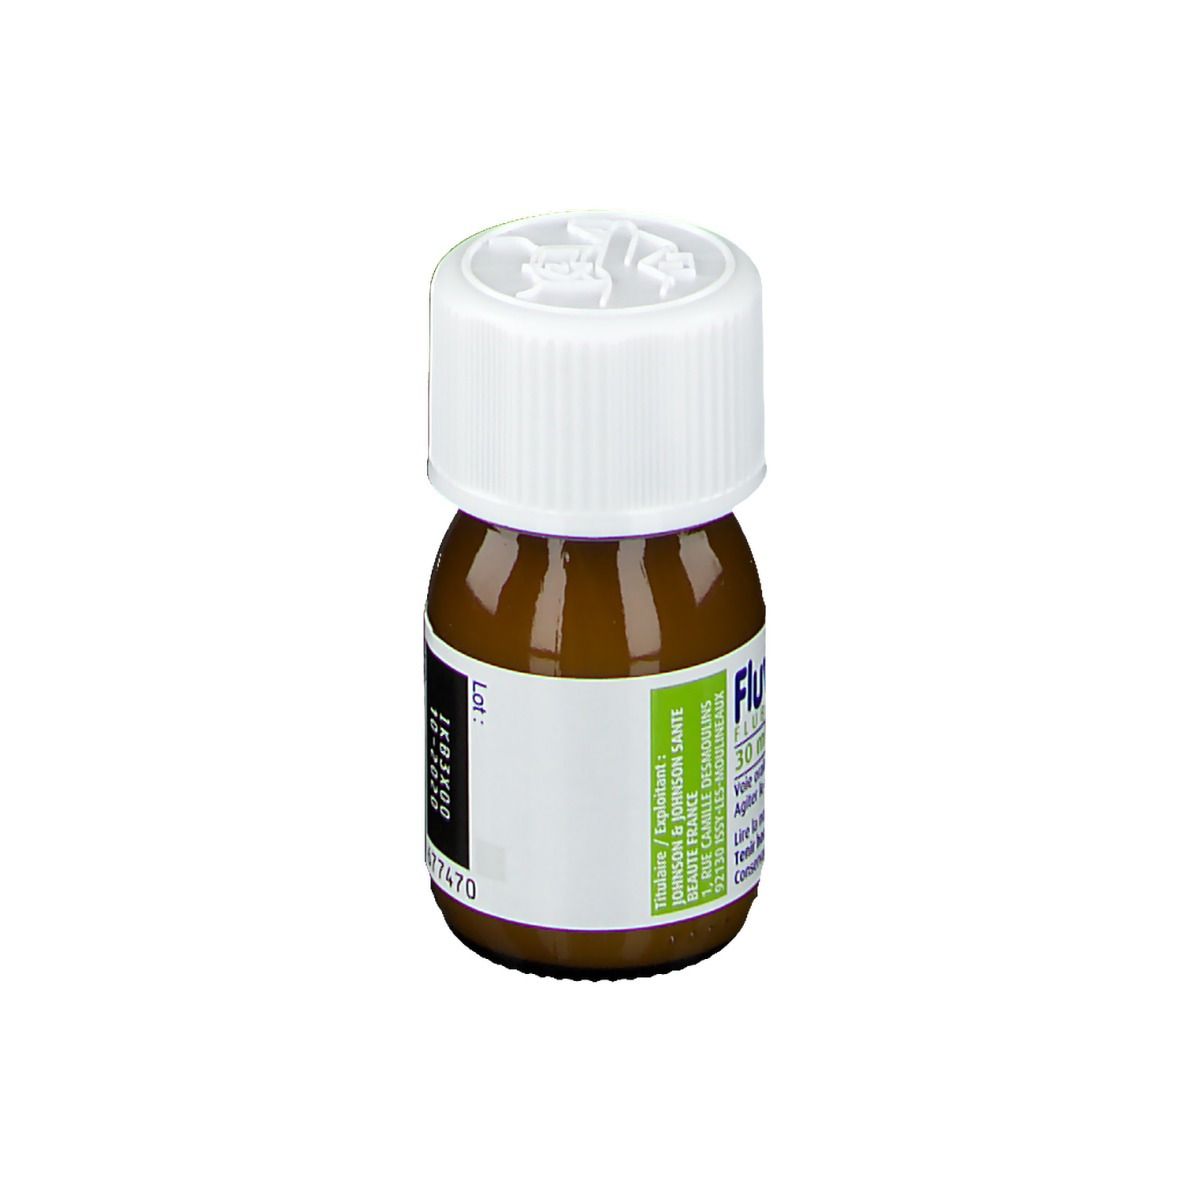 Fluvermal® Flubendazole 20 mg/ml